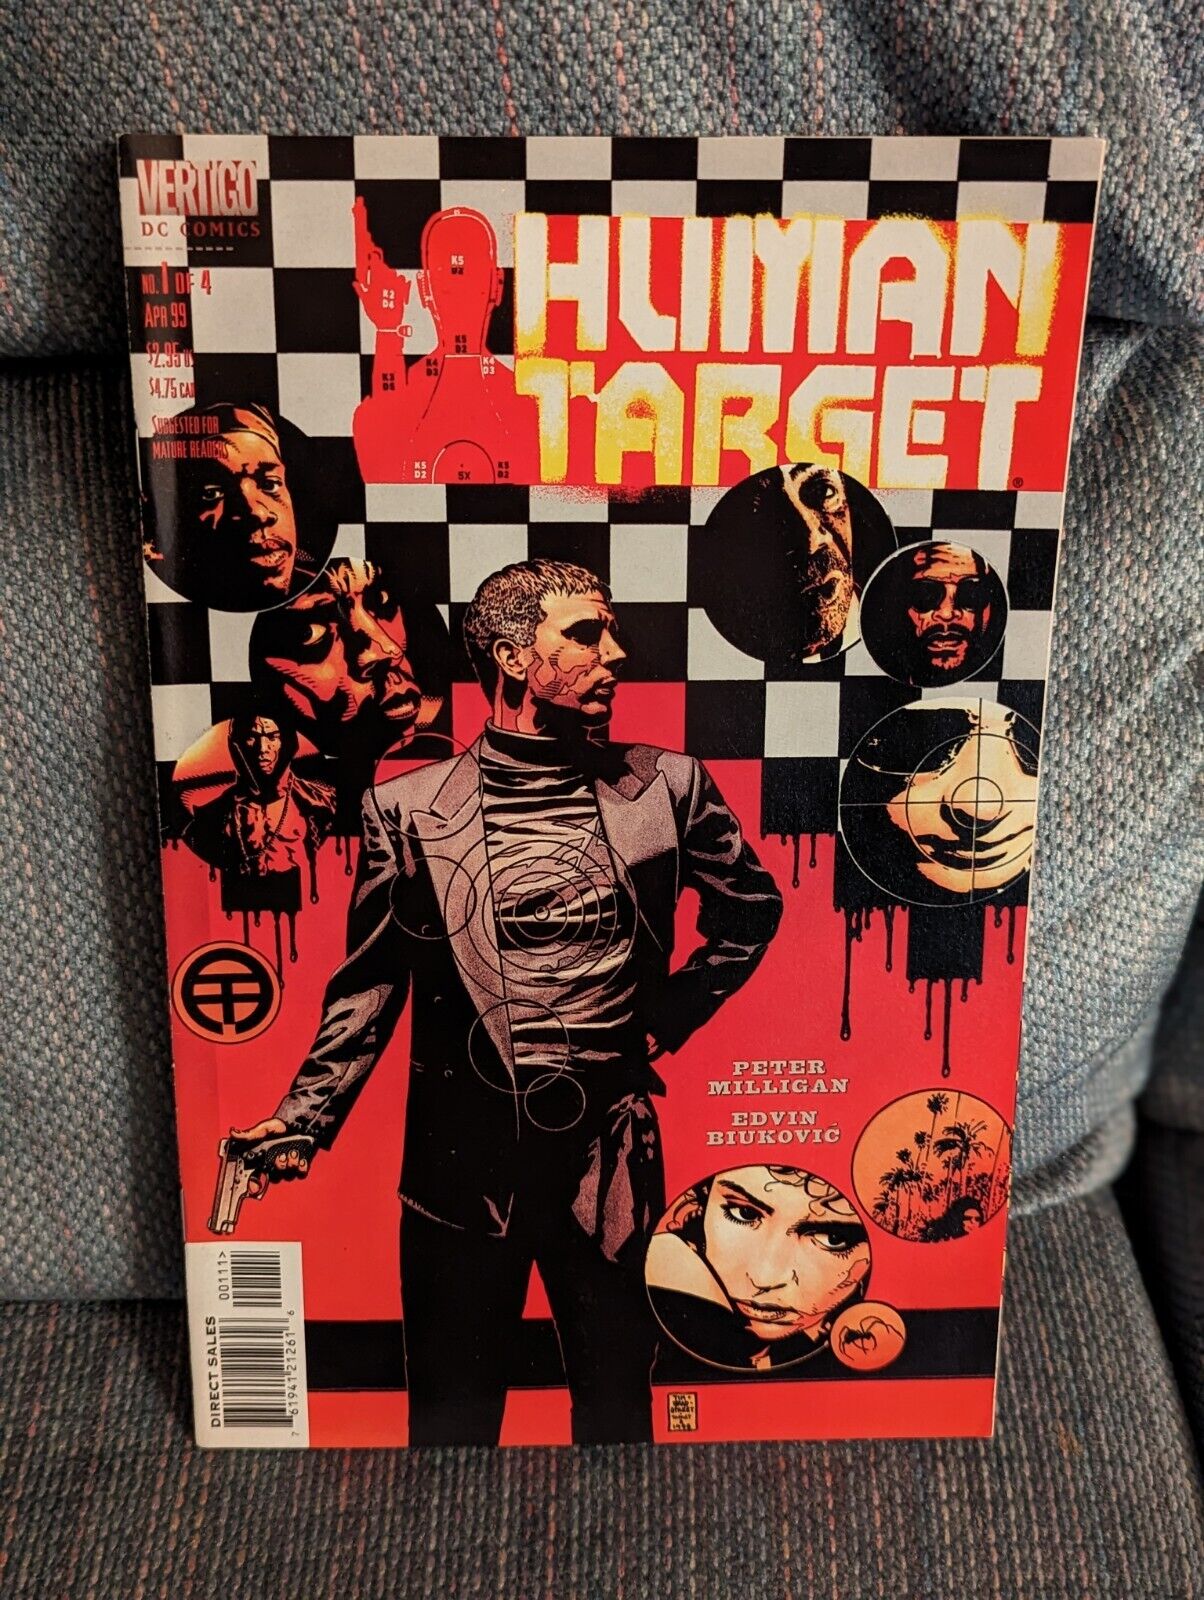 Human Target #1-4 COMPLETE SERIES SET - 1999 DC Vertigo Peter Milligan VF - NM!